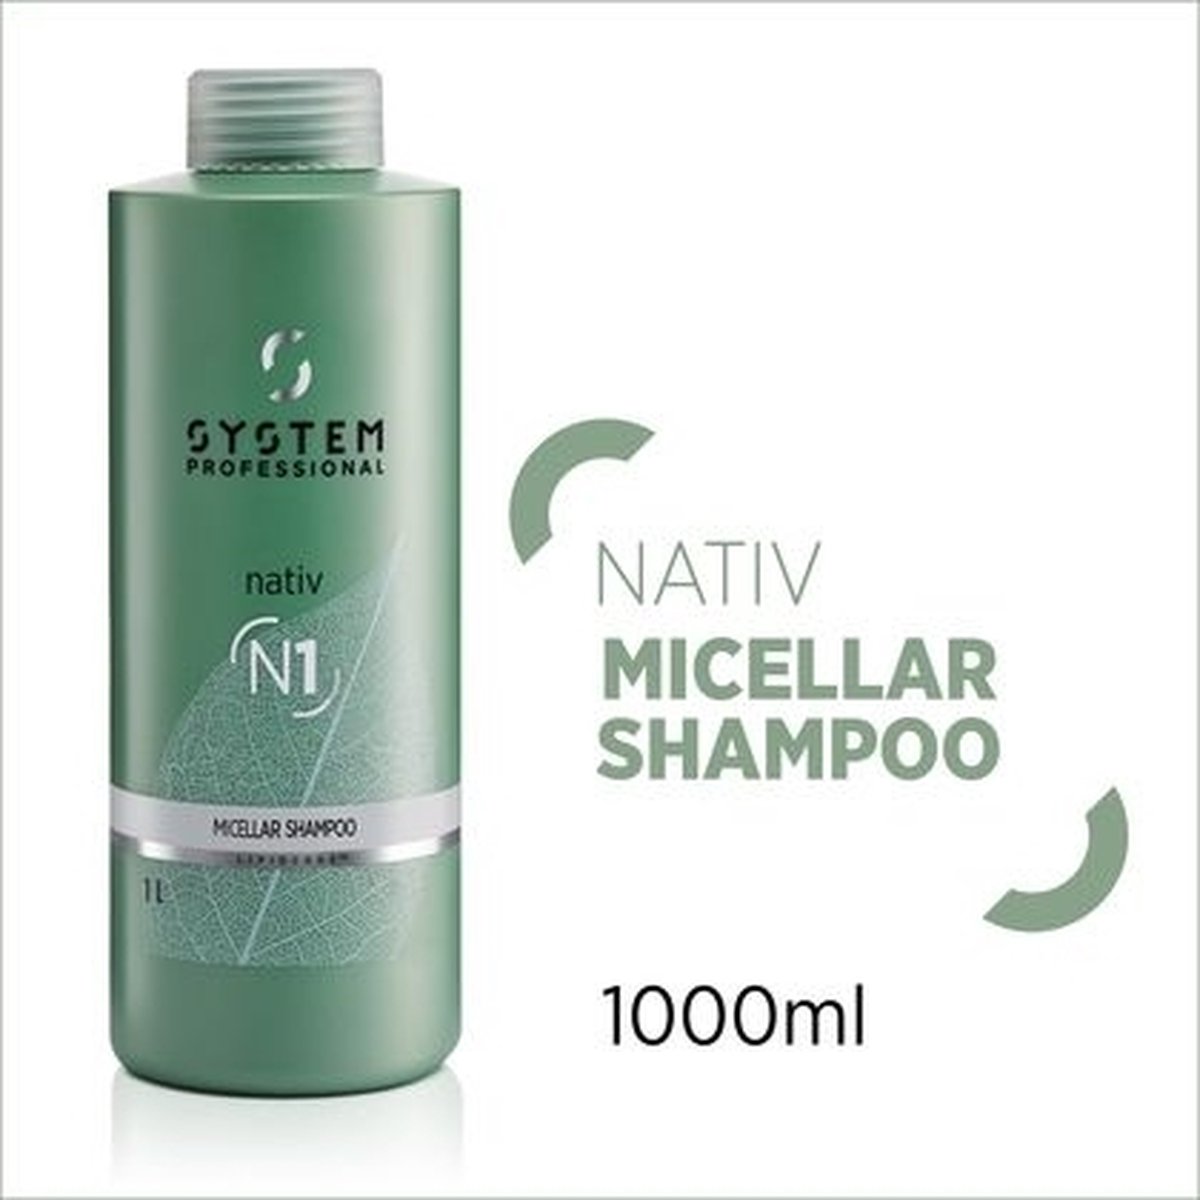 System Professional Nativ Micellar Shampoo